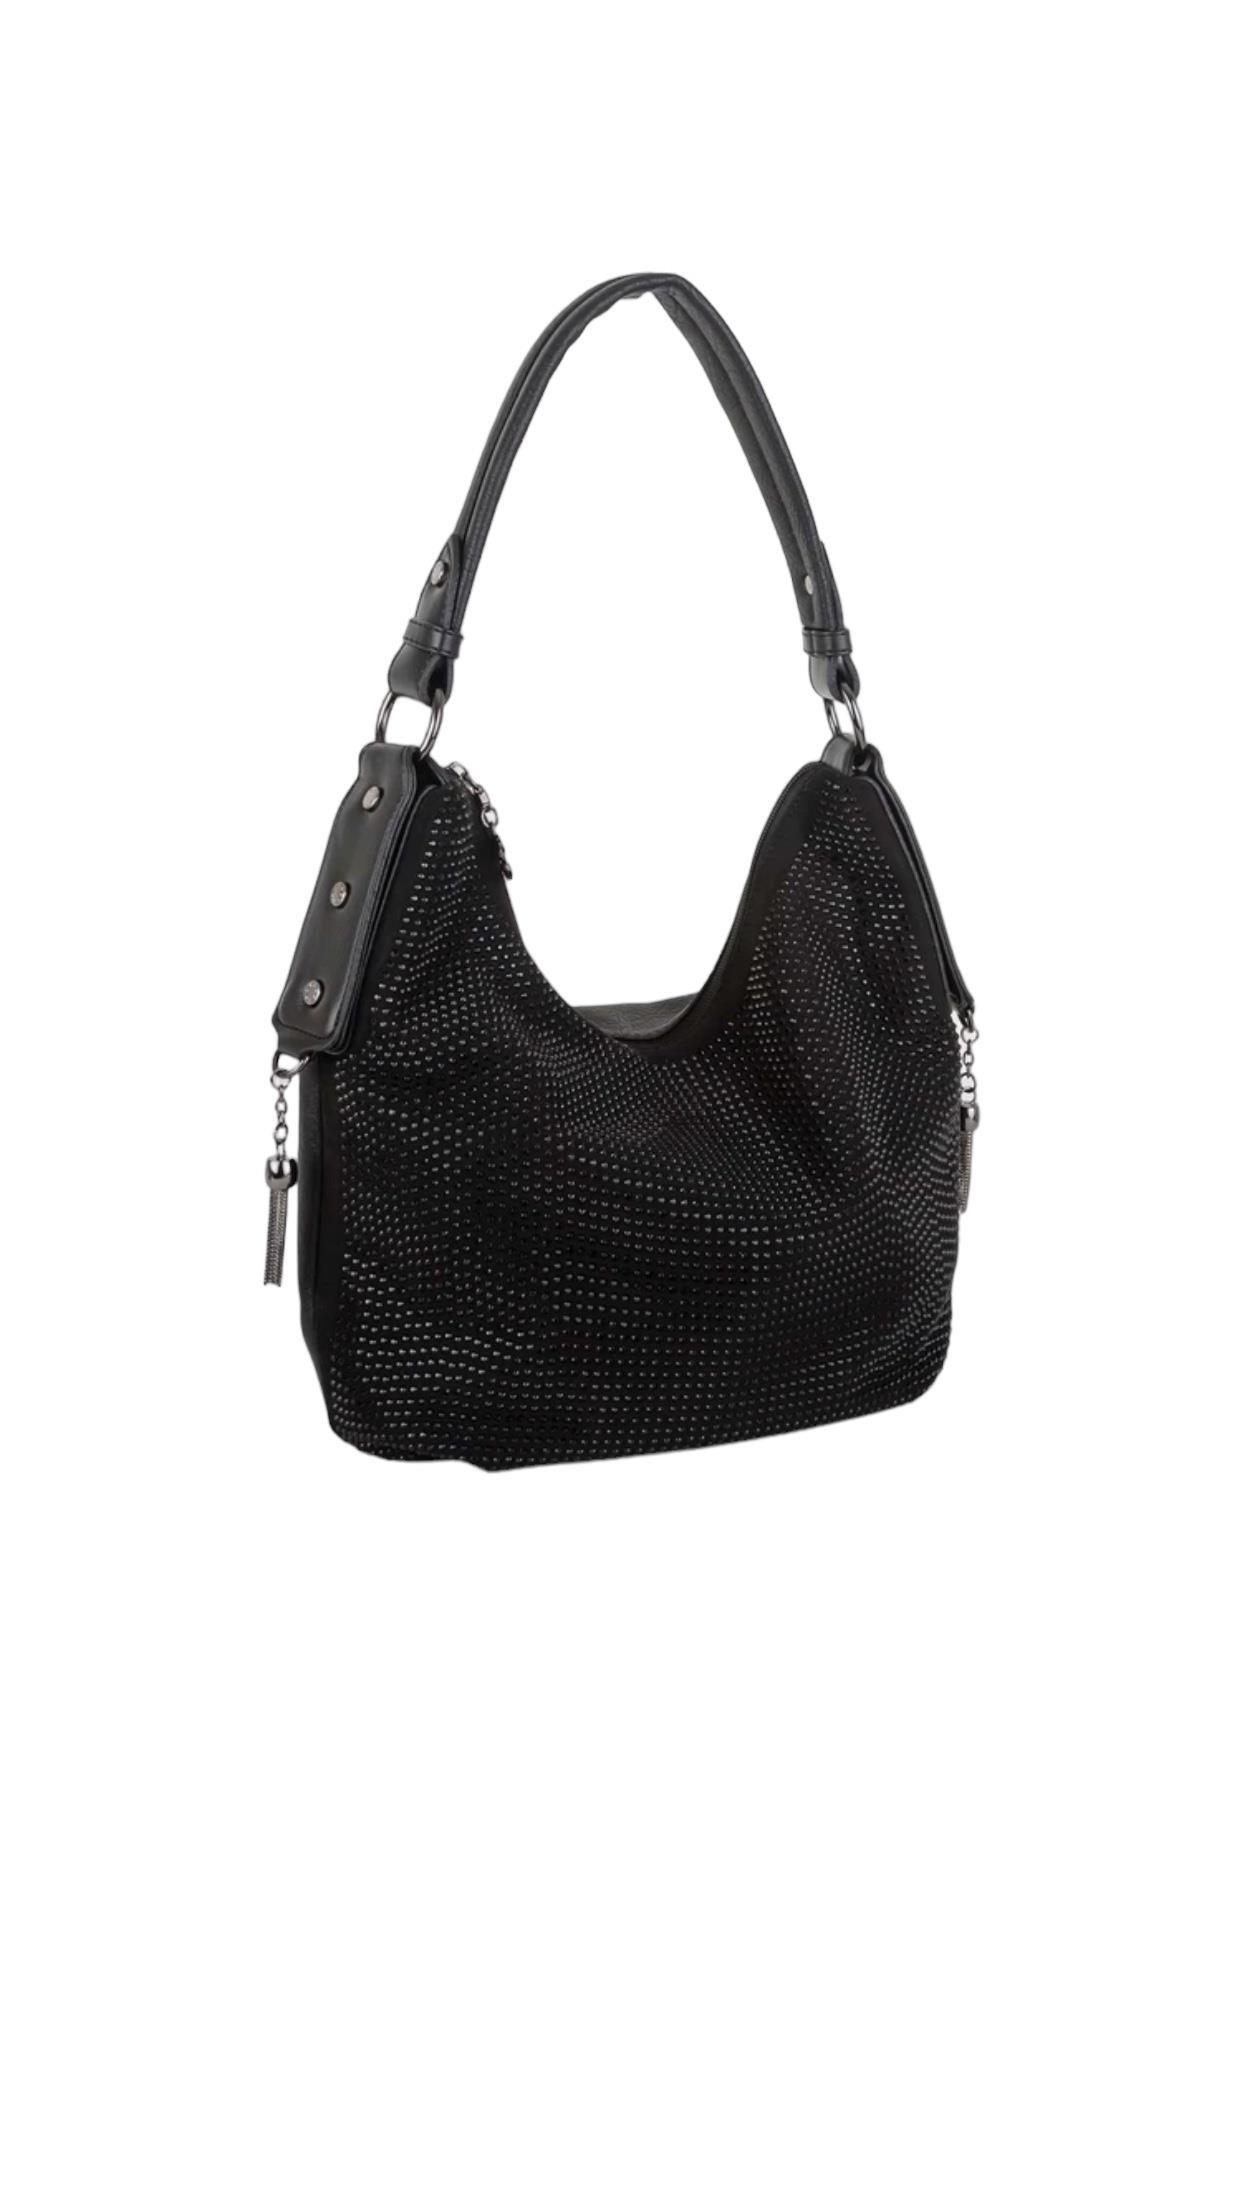 Taş siyah omuz çantası taşlı nas marka ebat 25cm30cm siyah |elizabell.com.tr